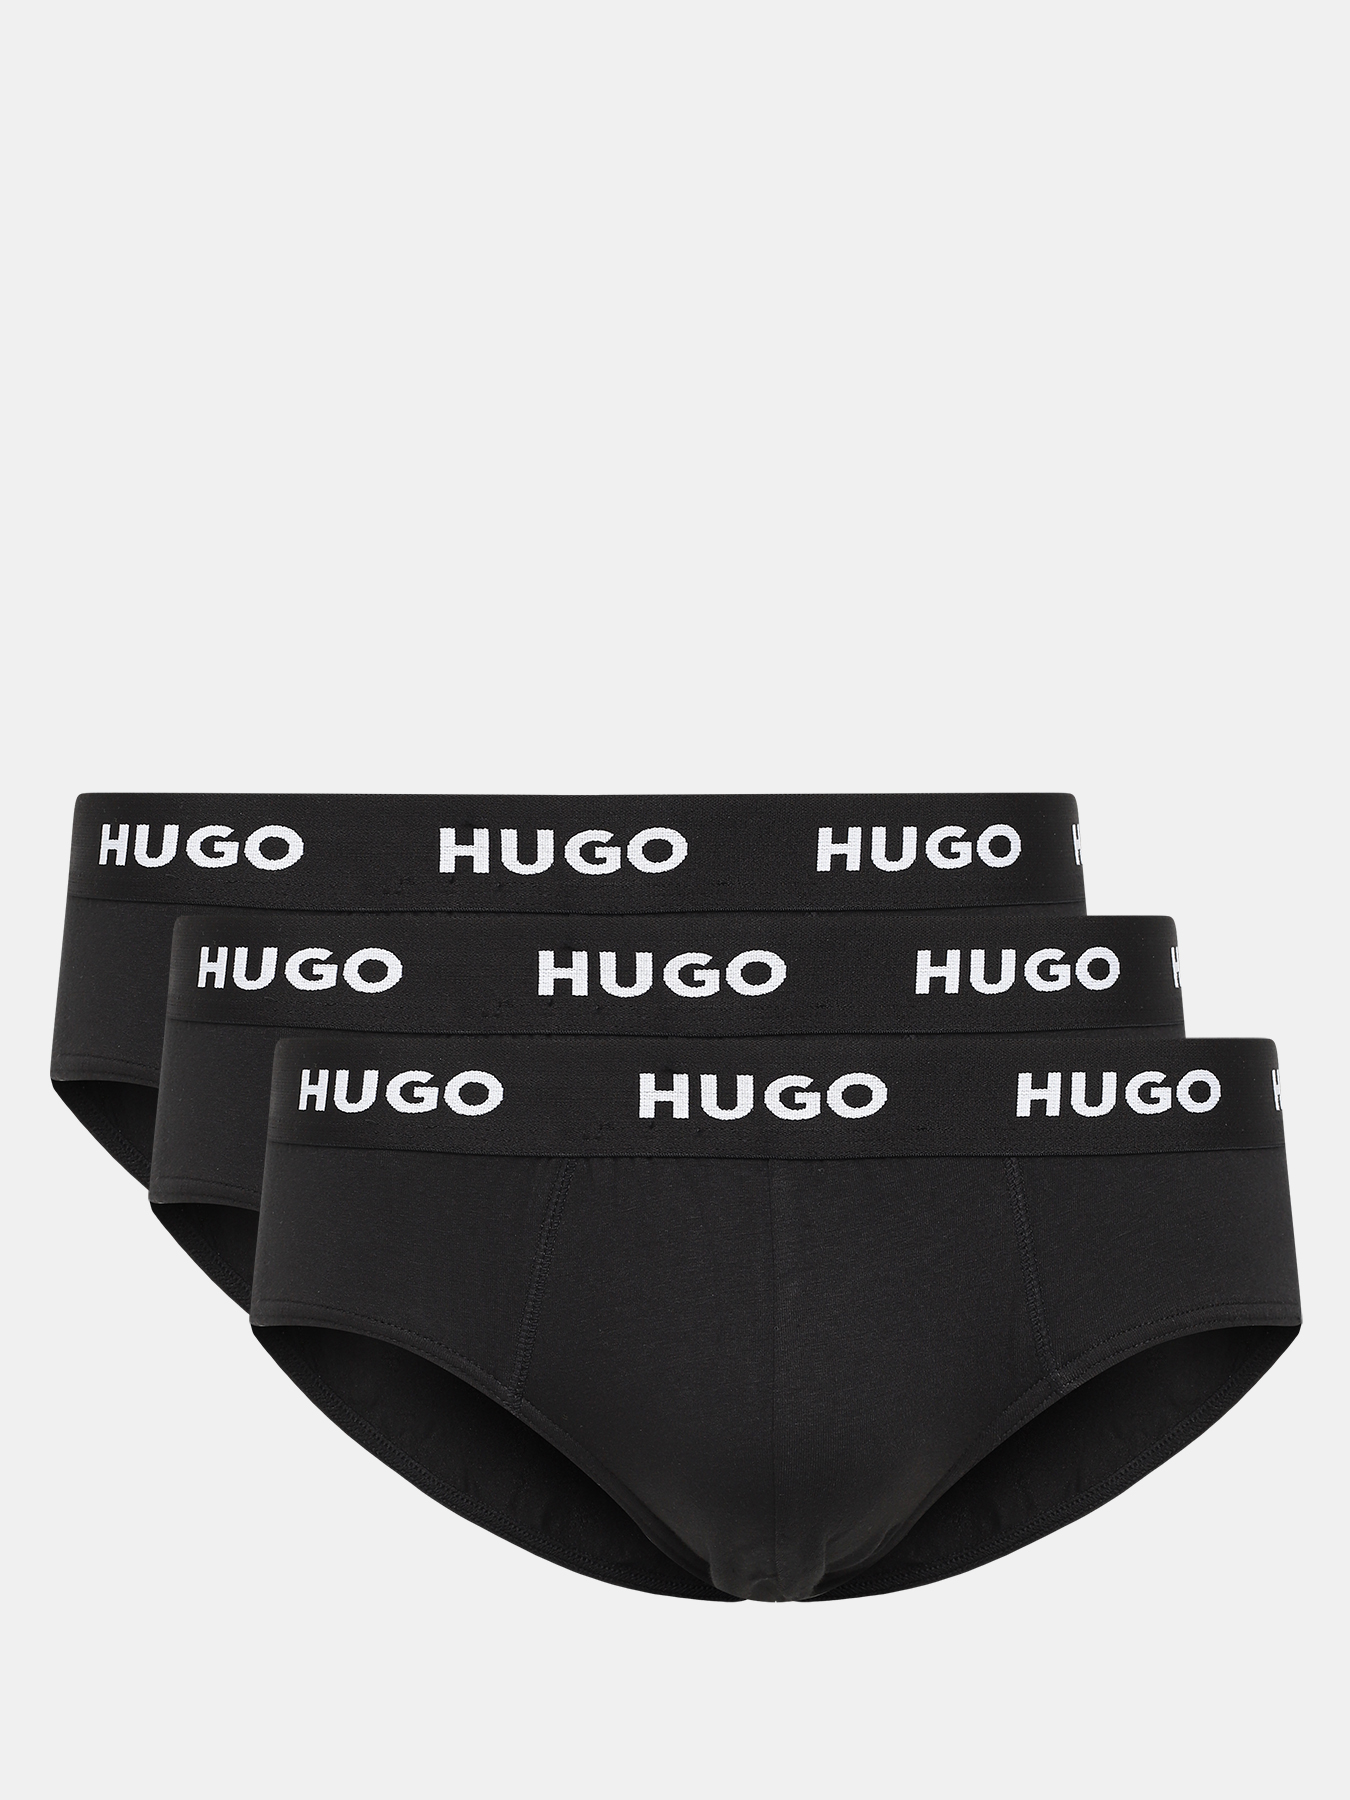 Hugo мужские трусы брифы. Нижнее белье Hugo Love. Trunk Triplet Boss Hugo. Hugo Triplet Pack briefs Slips. Hugo размеры